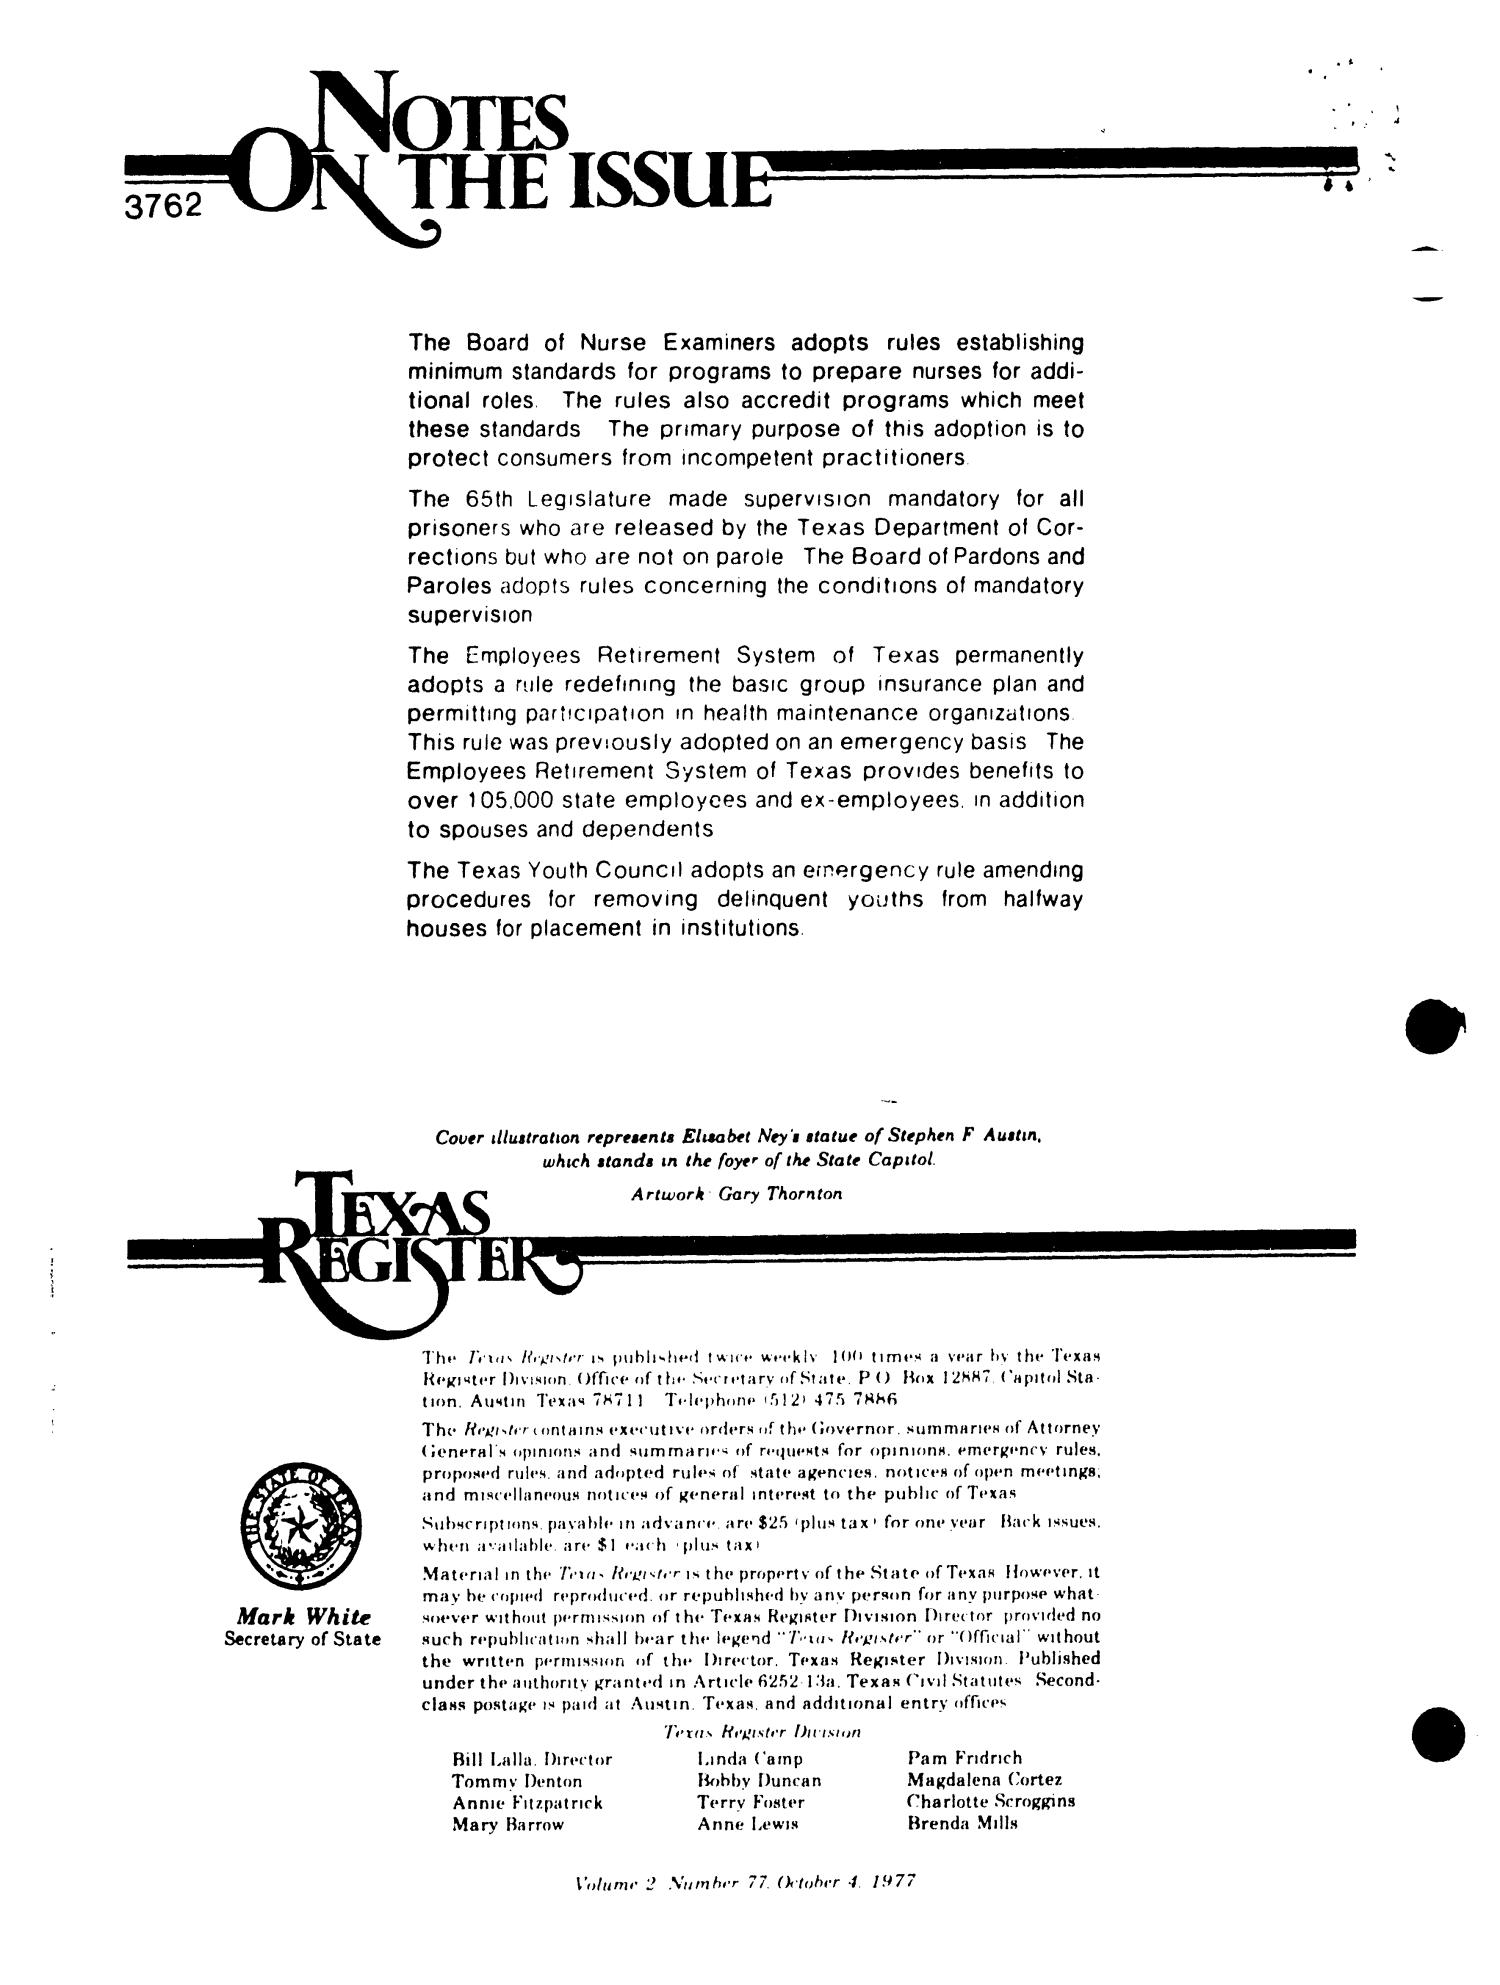 Texas Register, Volume 2, Number 77, Pages 3761-3830, October 4, 1977
                                                
                                                    3762
                                                